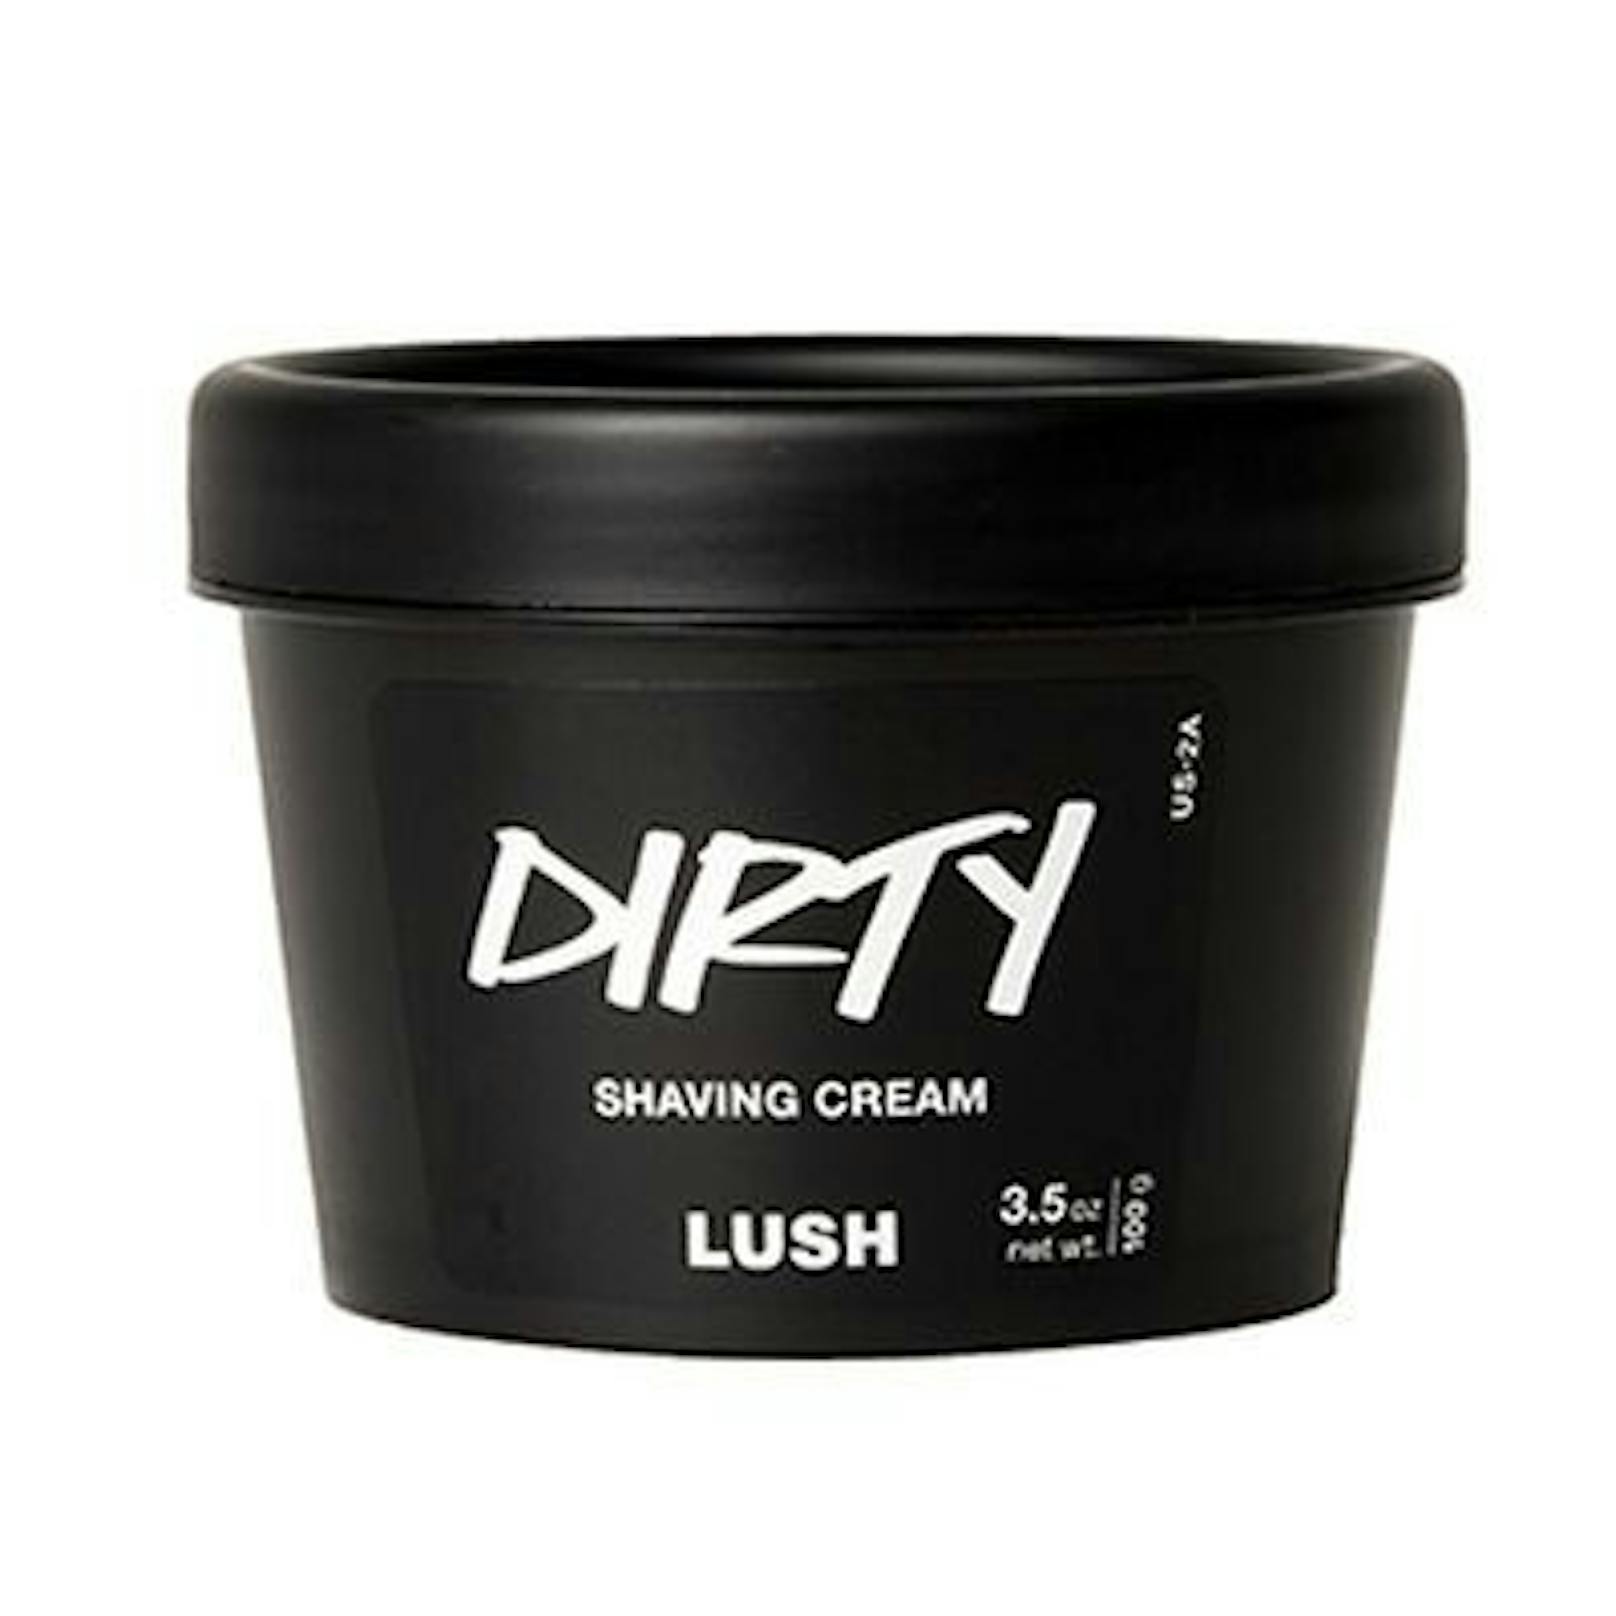 Dirty&nbsp;Shaving Cream von Lush, 11,95 Euro.